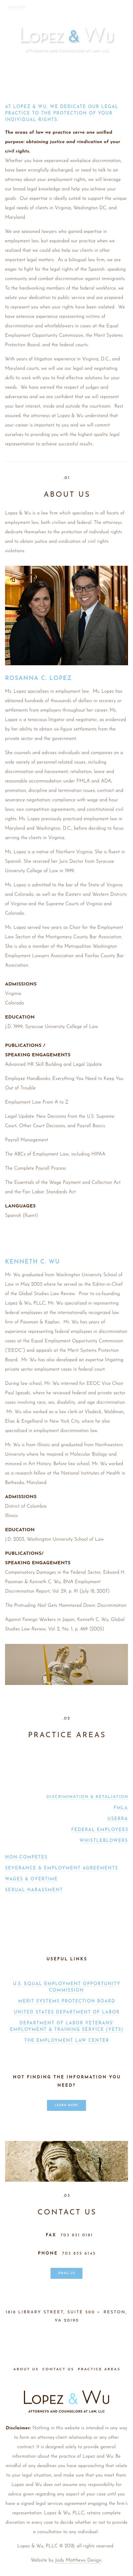 Lopez & Wu, PLLC - Reston VA Lawyers